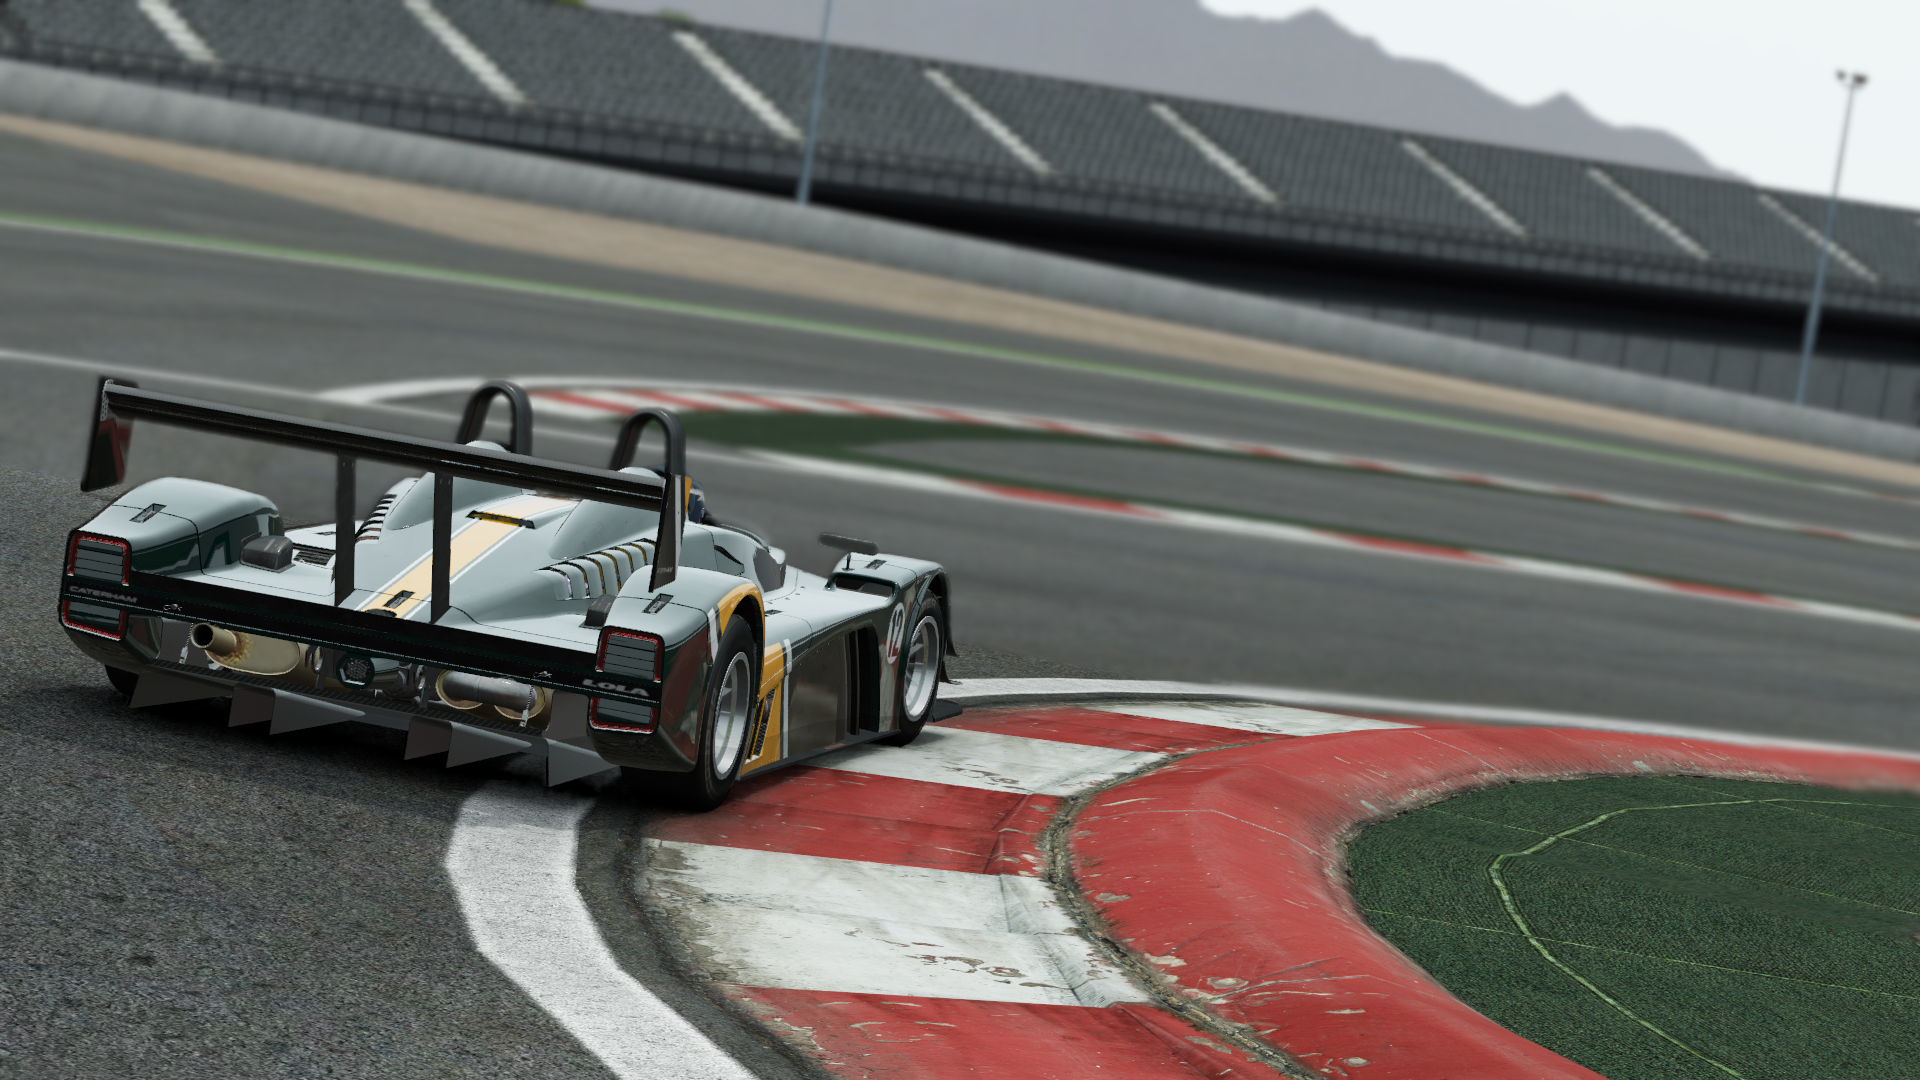 Car Project Cars PC Gaming Racing Racing Simulators 1920x1080